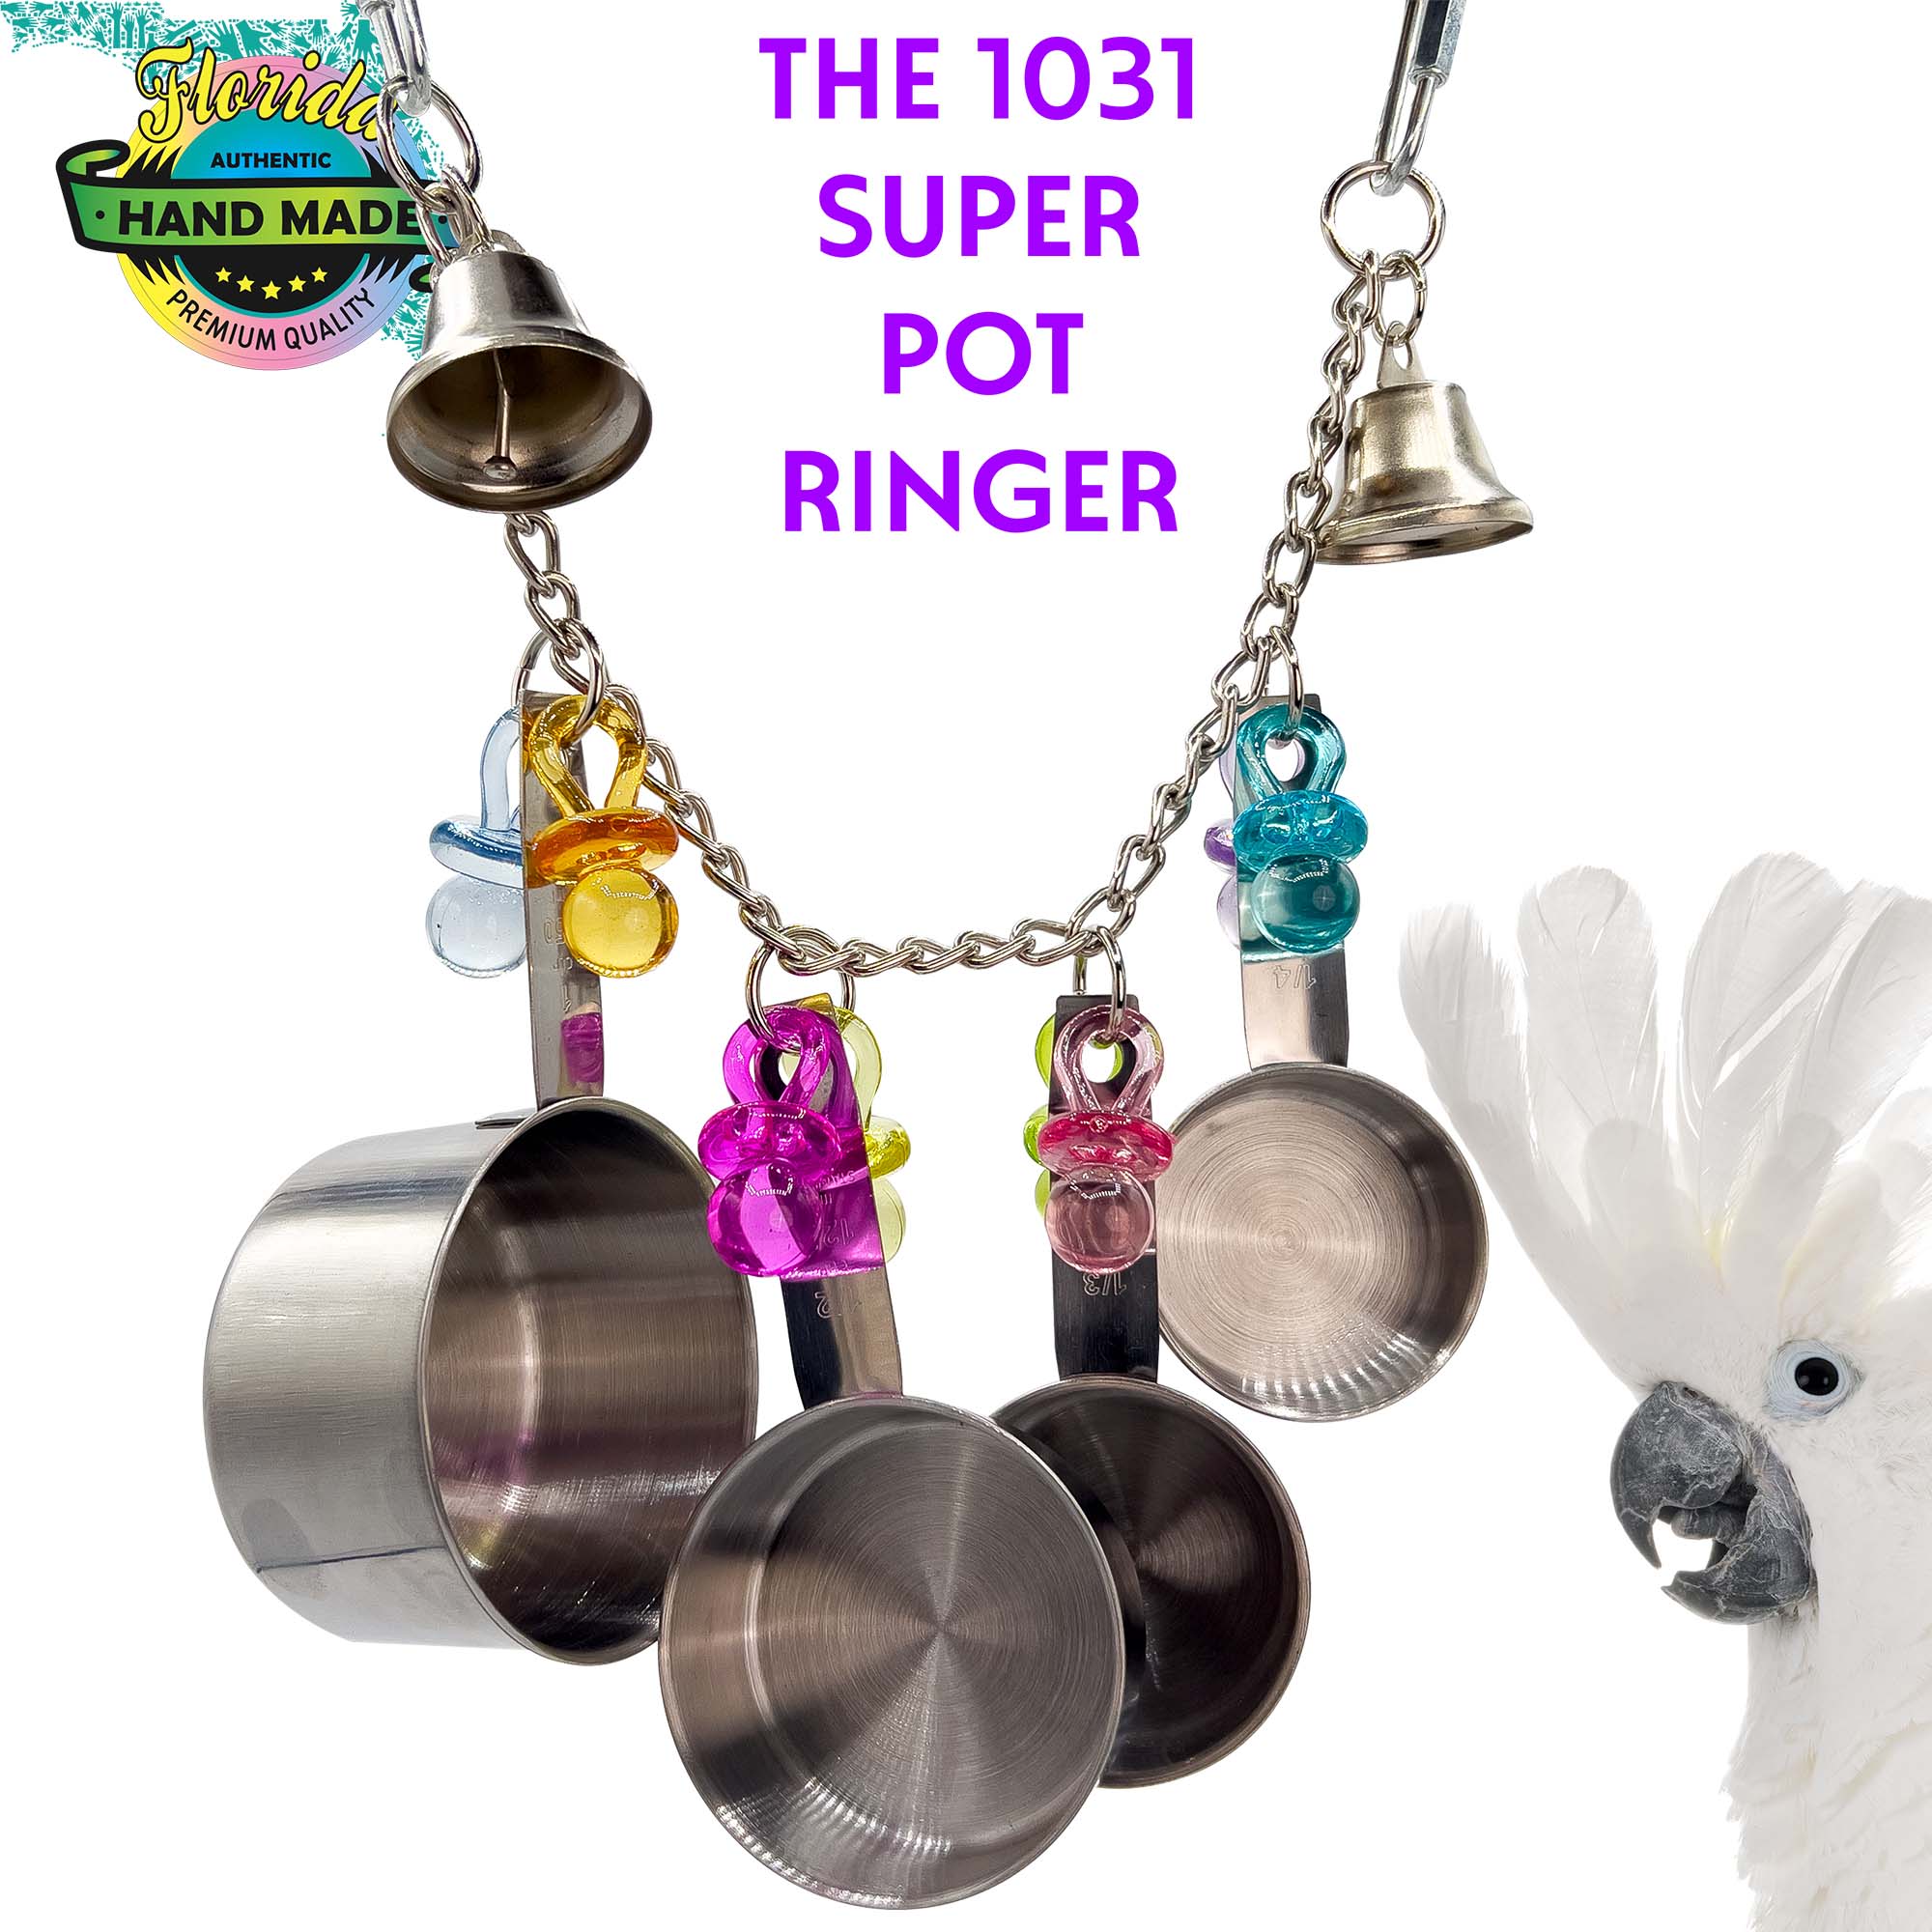 1031 Super Pot Ringer